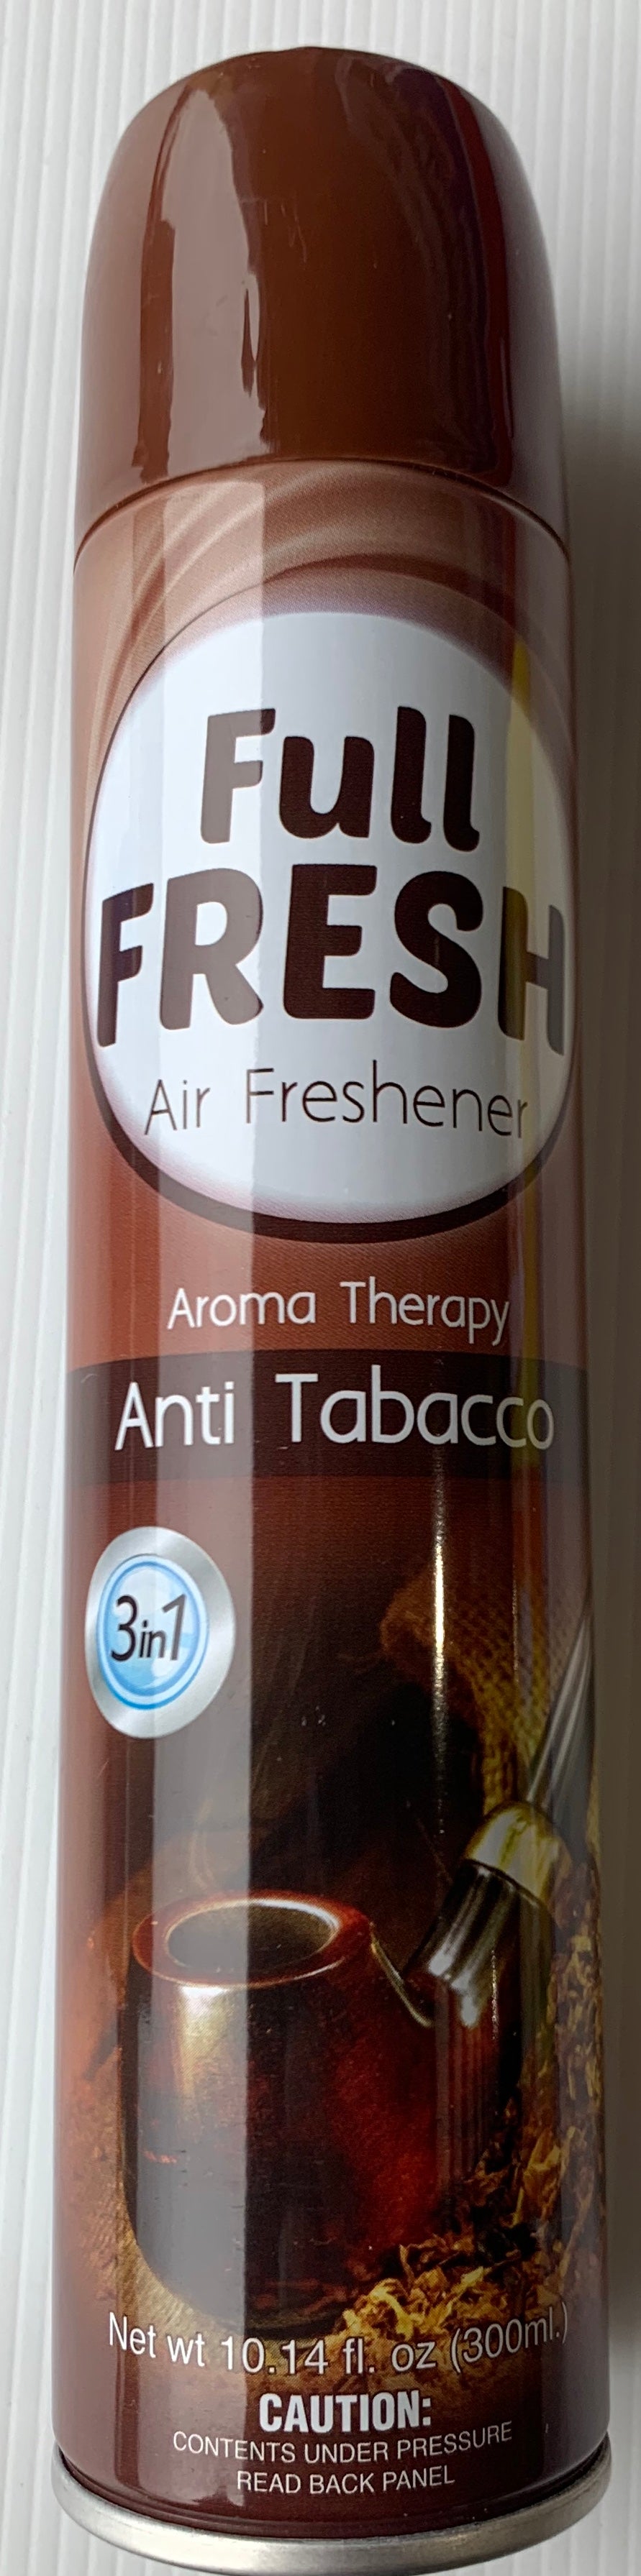 Full Fresh Air Freshener AROMA THERAPY ANTI TOBACCO 300g